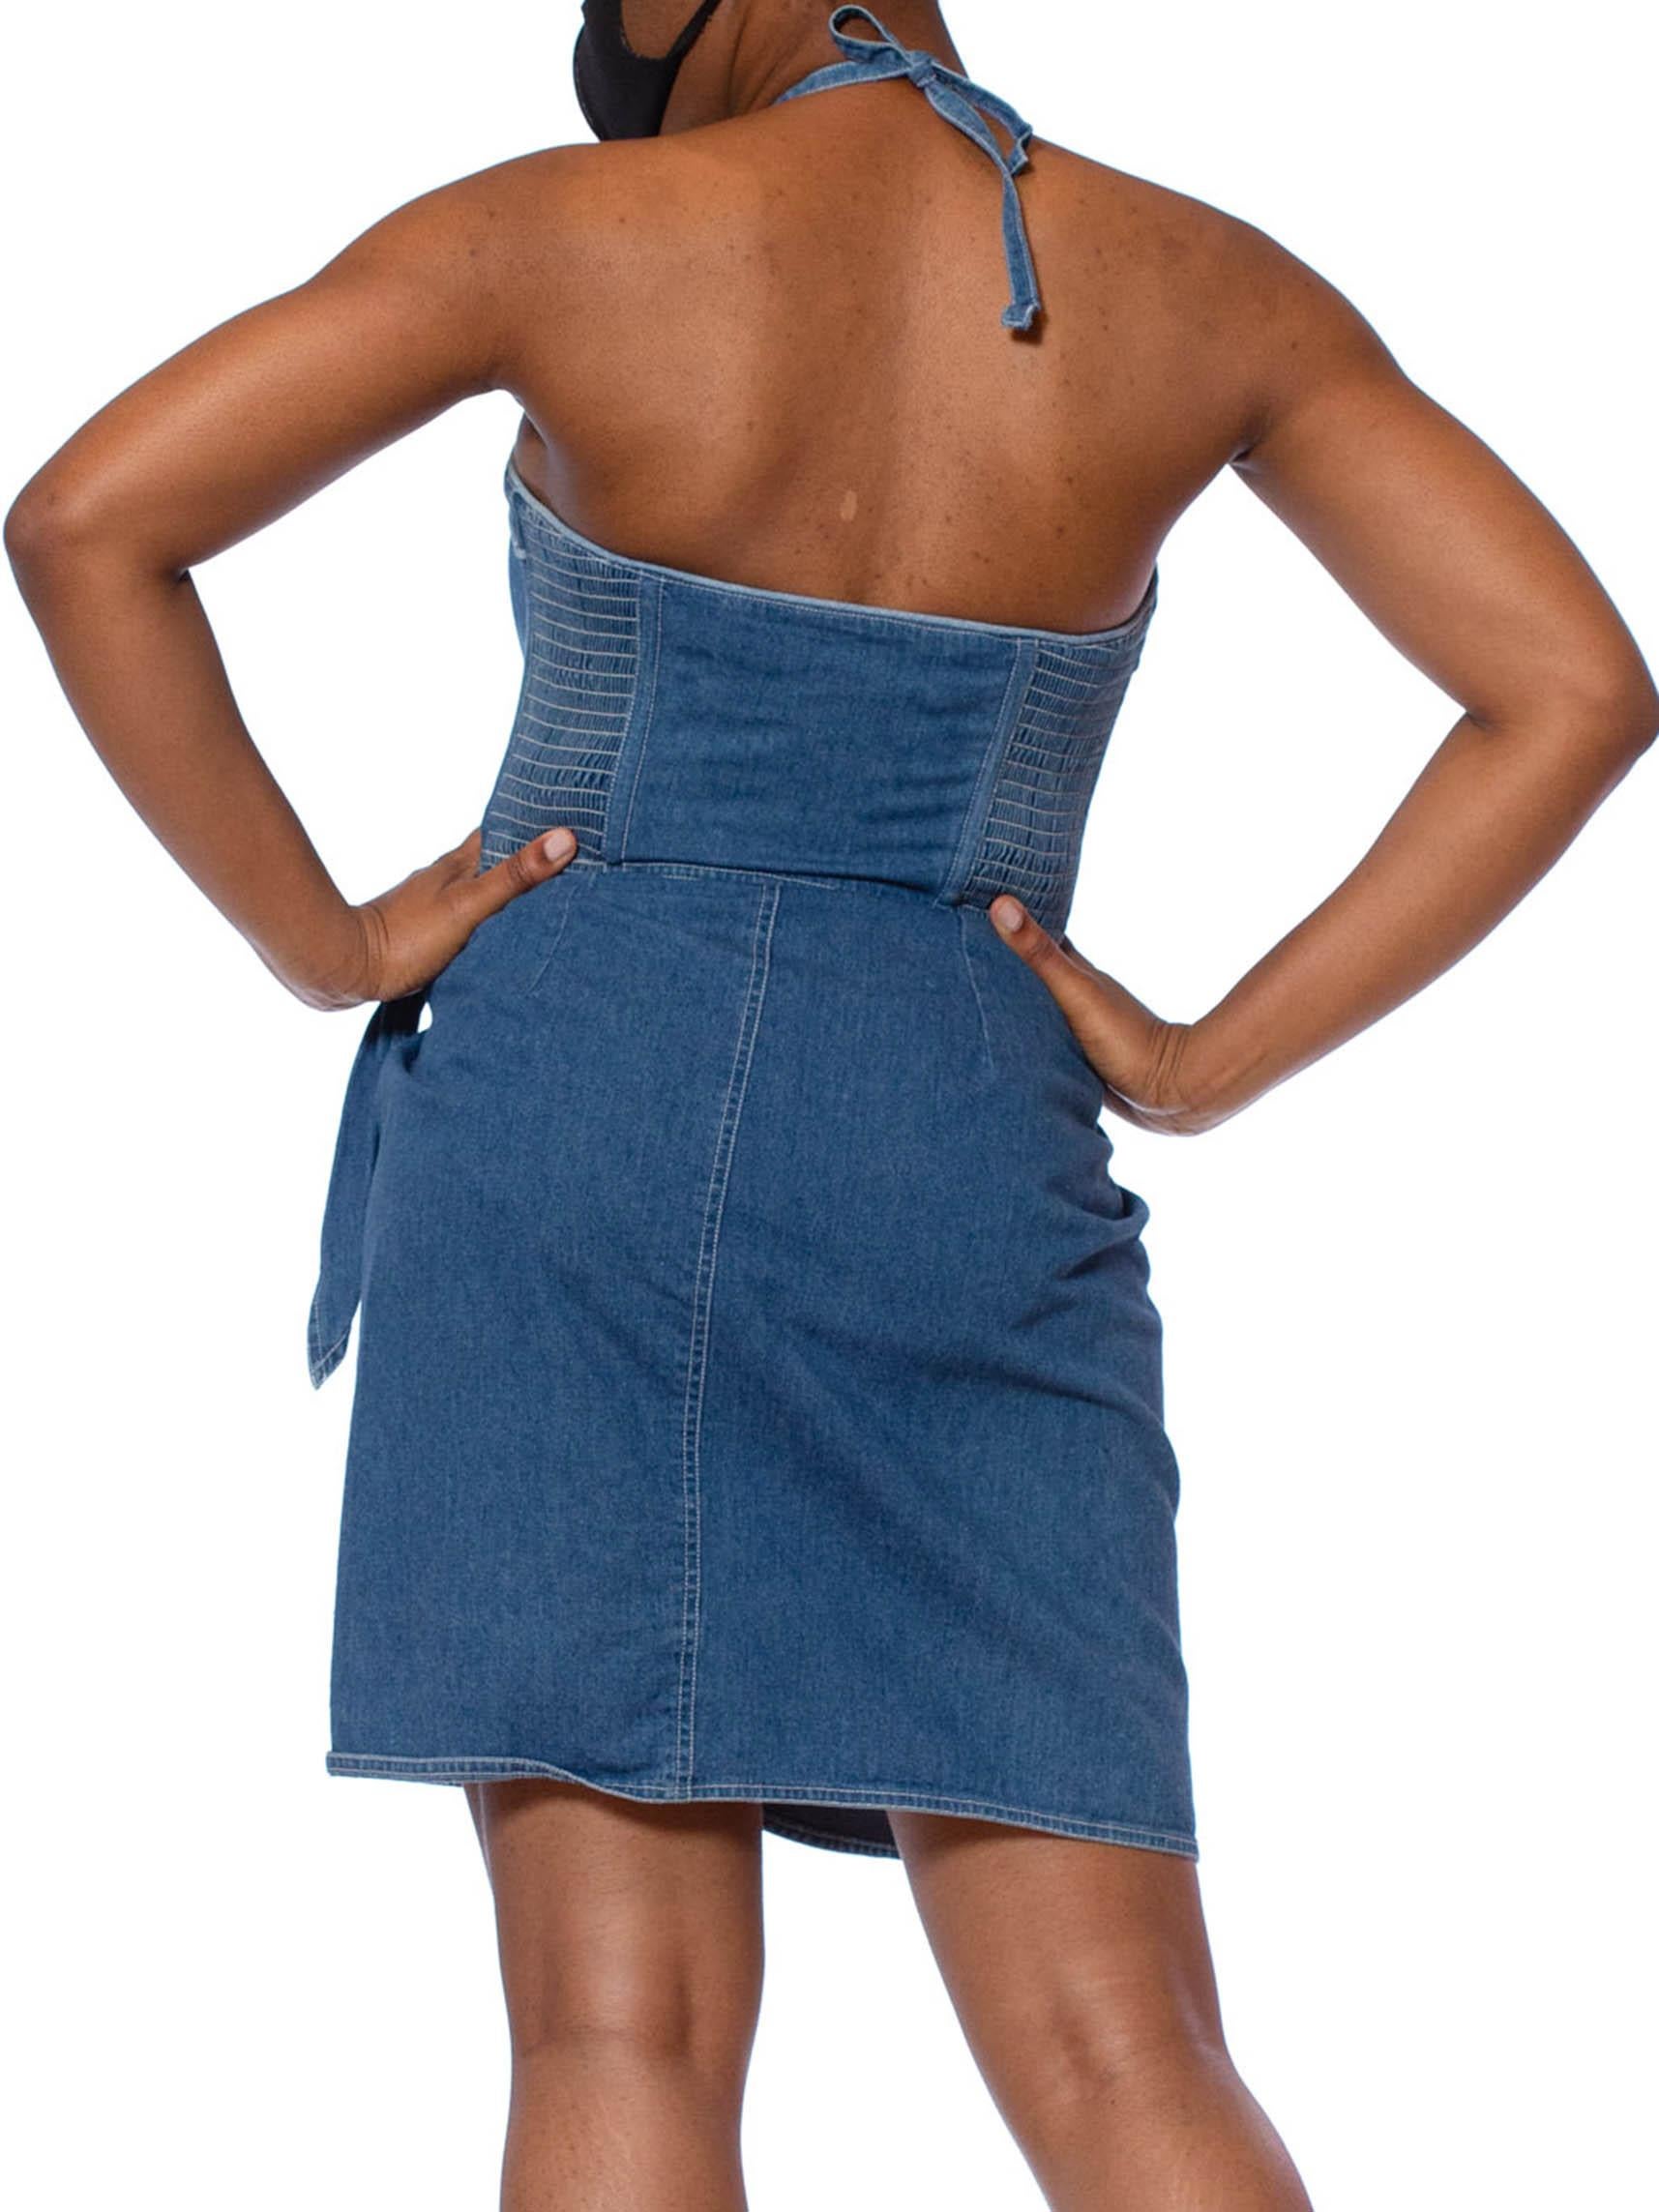 1990S DKNY DONNA KARAN Denim Cotton Pin-Up Bodysuit Wrap Skirt Dress 2